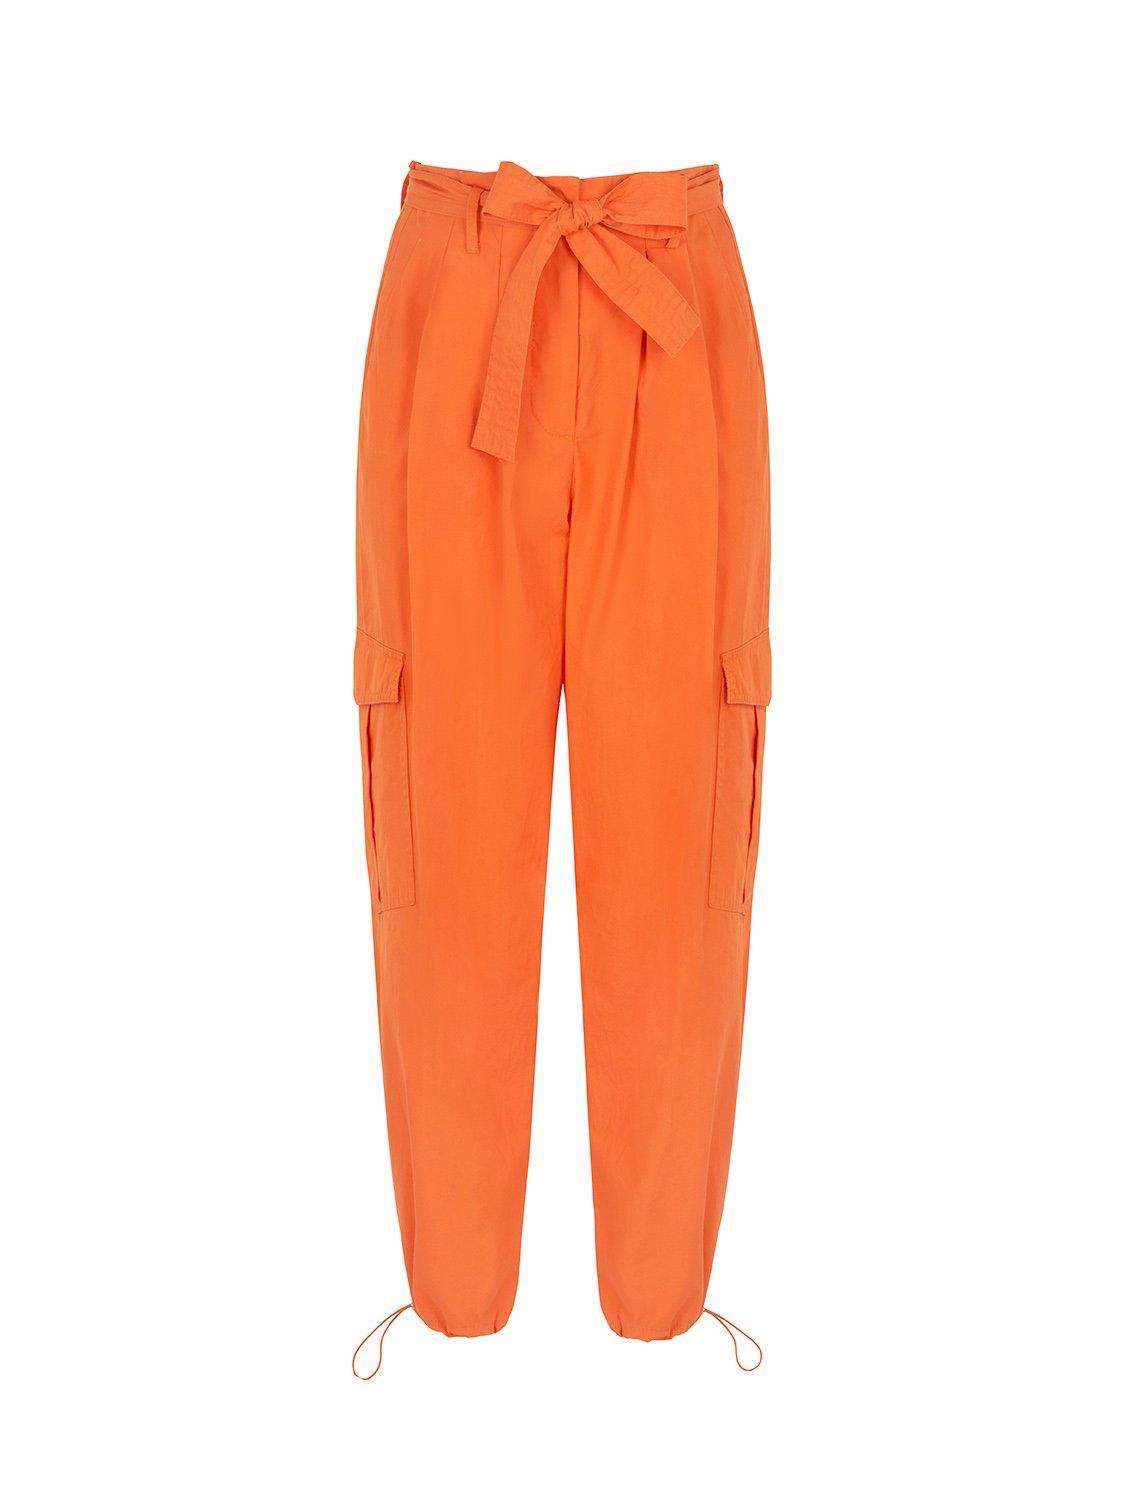 Nocturne Women's Yellow / Orange Belted Cargo Orange Pants